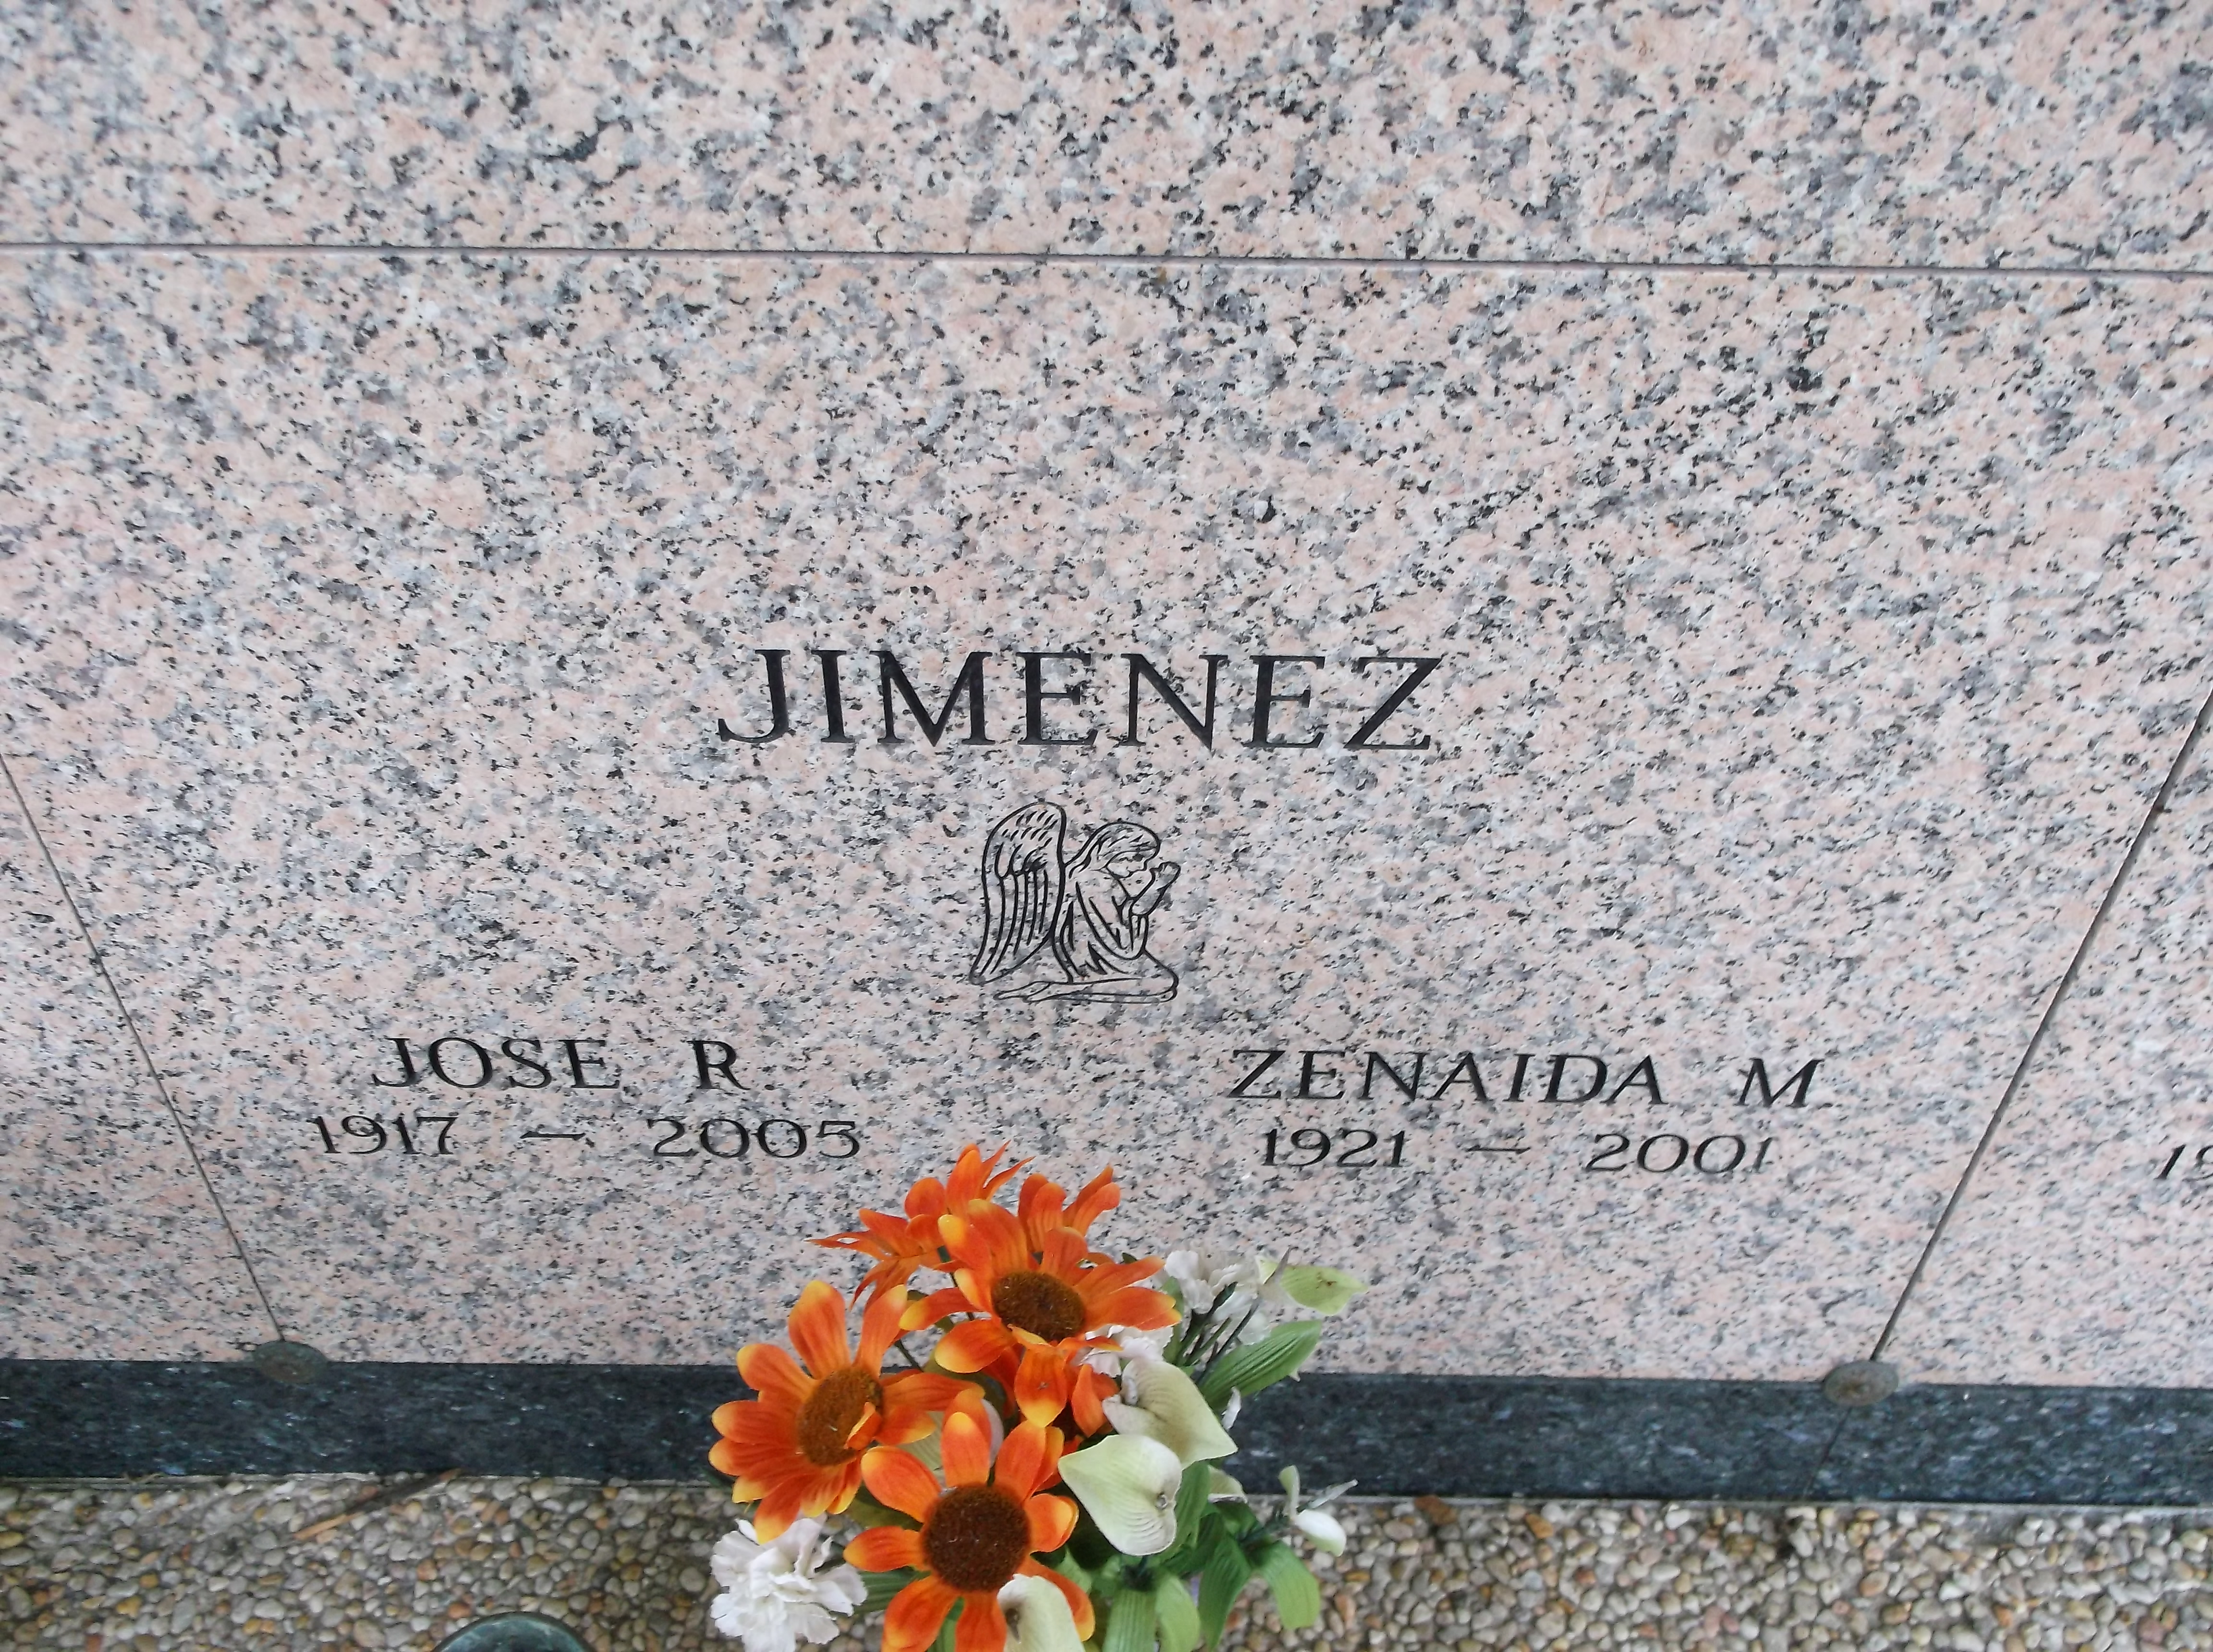 Jose R Jimenez